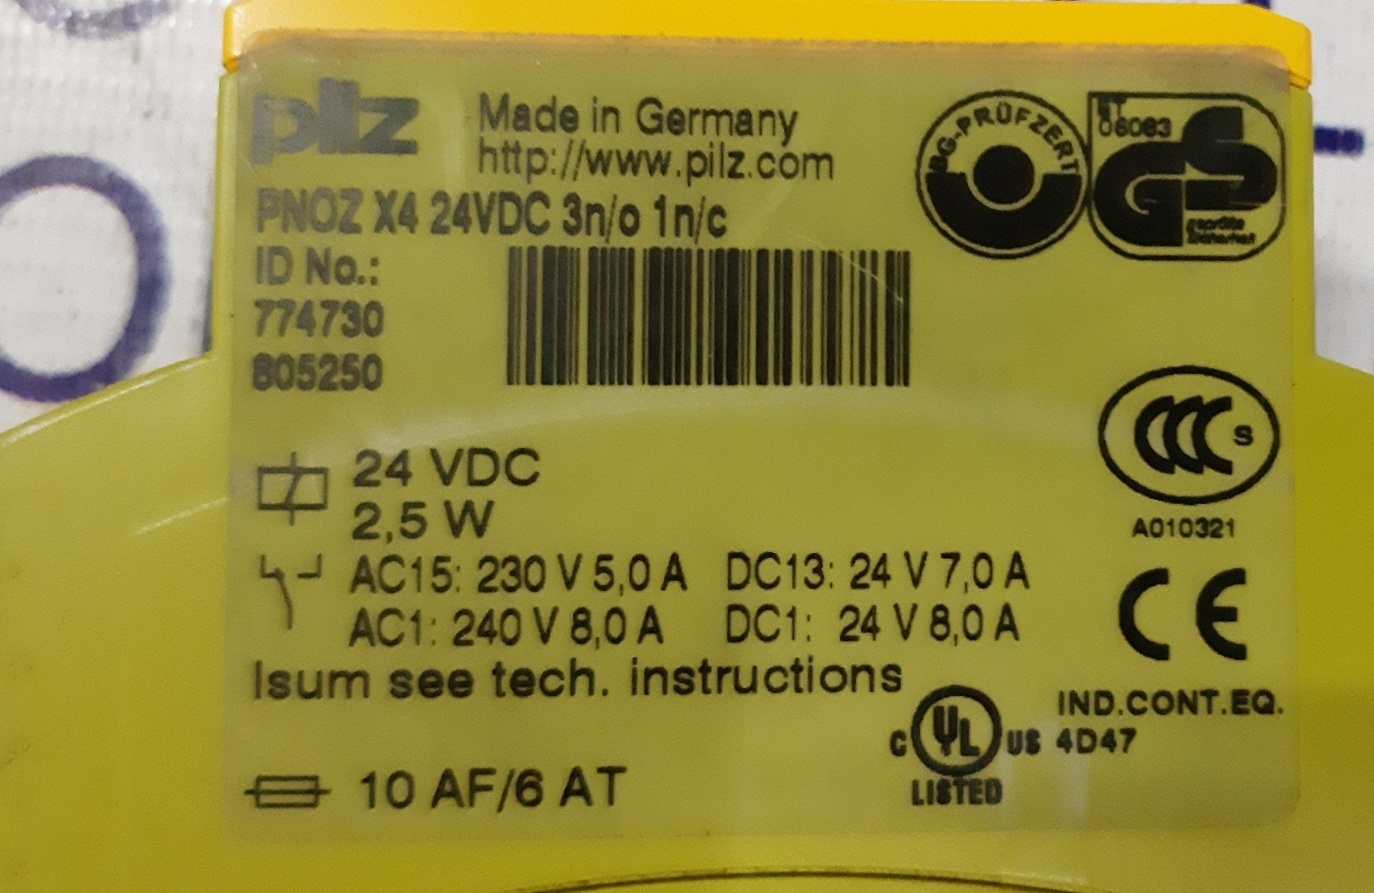 PILZ SAFETY RELAY MODULE PNOZ X4 24VDC 3N/01N/C